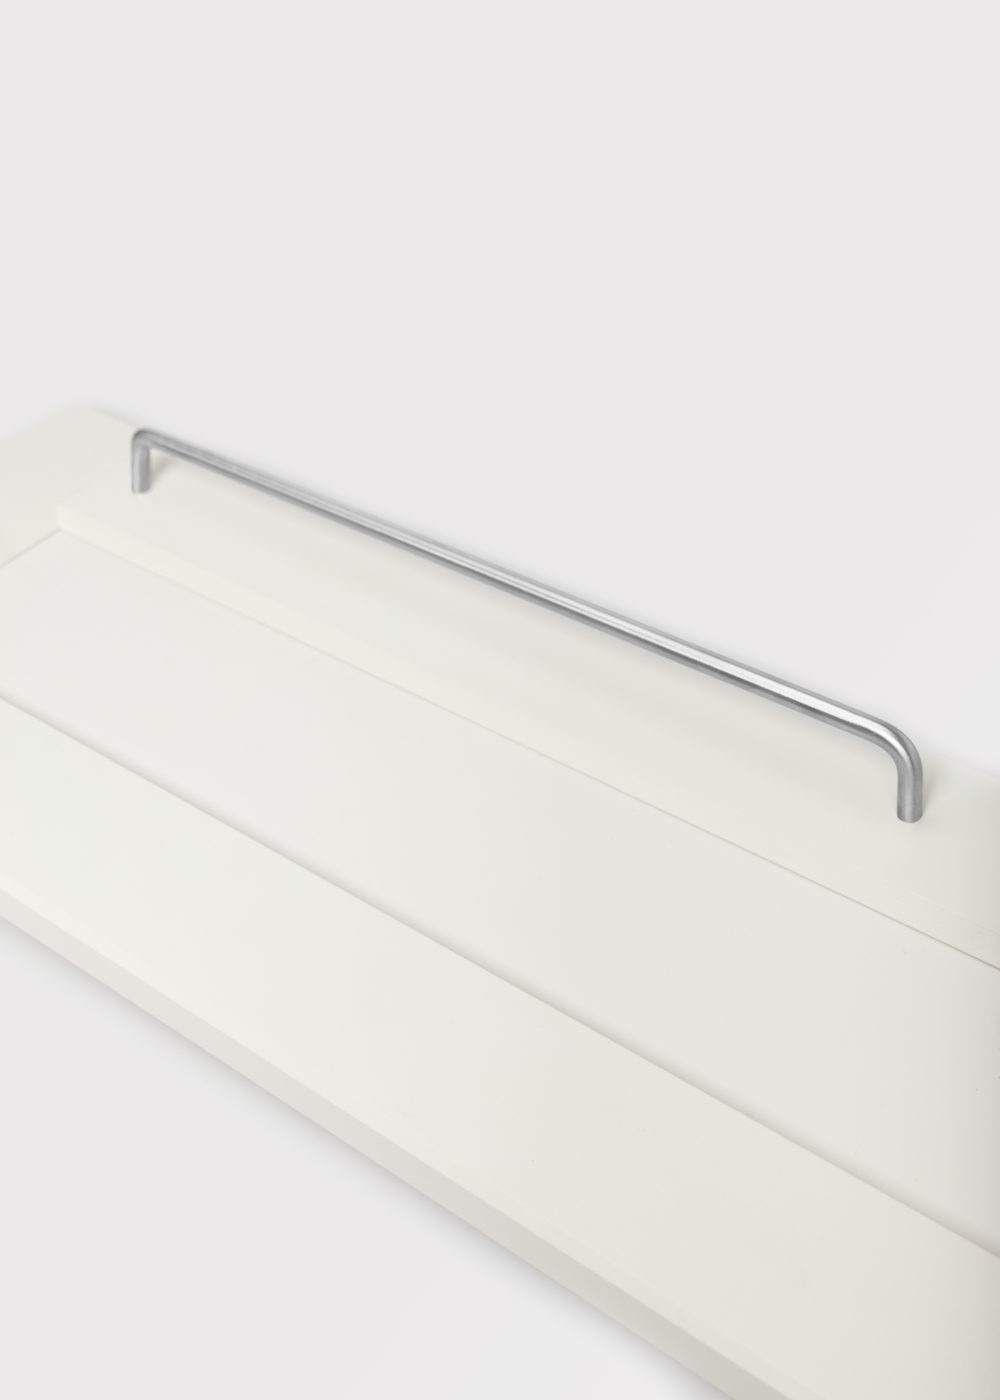 Lana Steel stainless steel cabinet handle